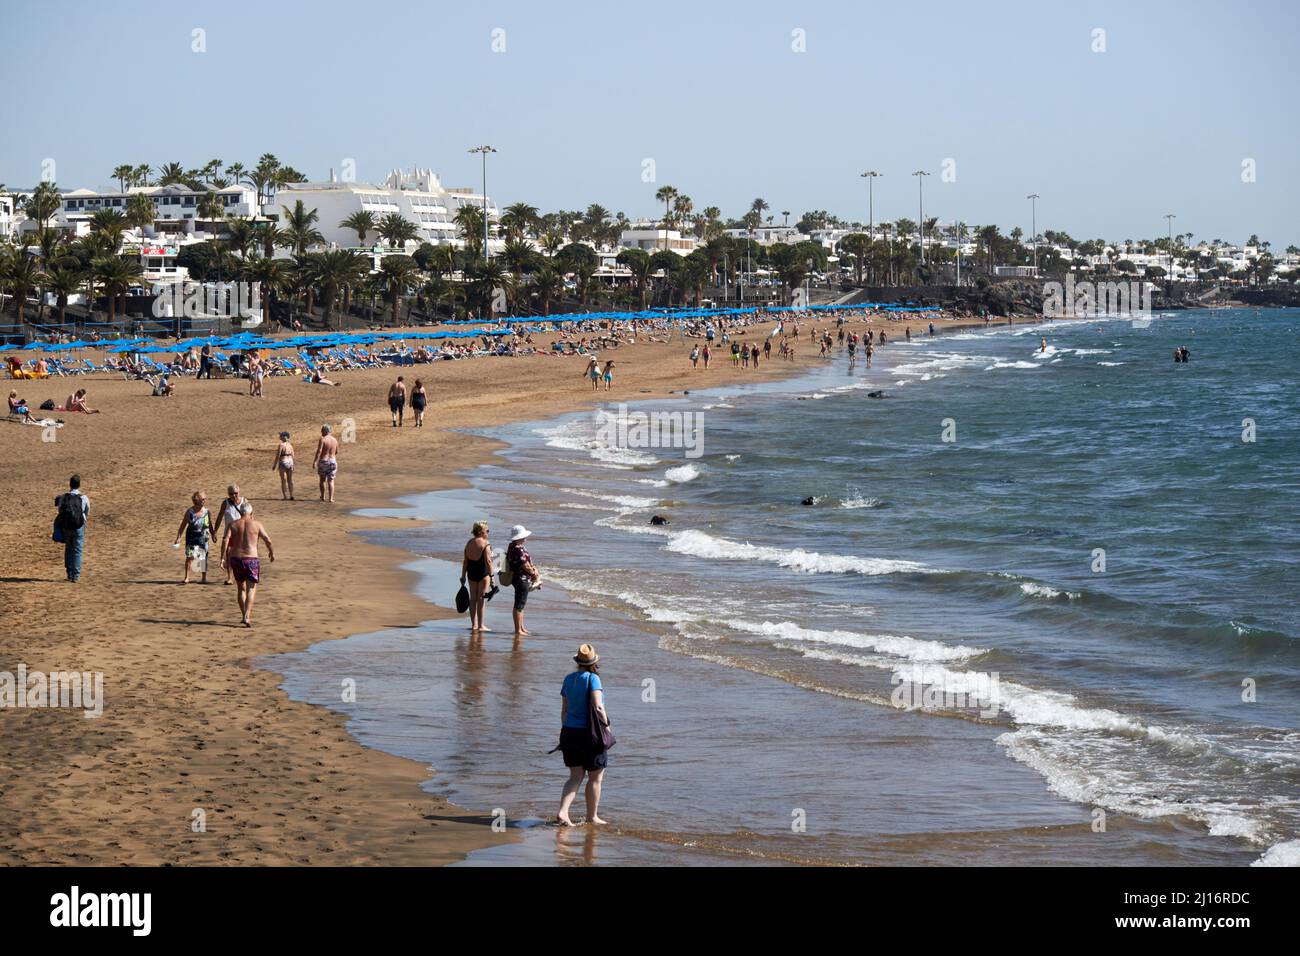 Beliebter strand playa grande in puerto del carmen lanzarote kanarische Inseln spanien Stockfoto